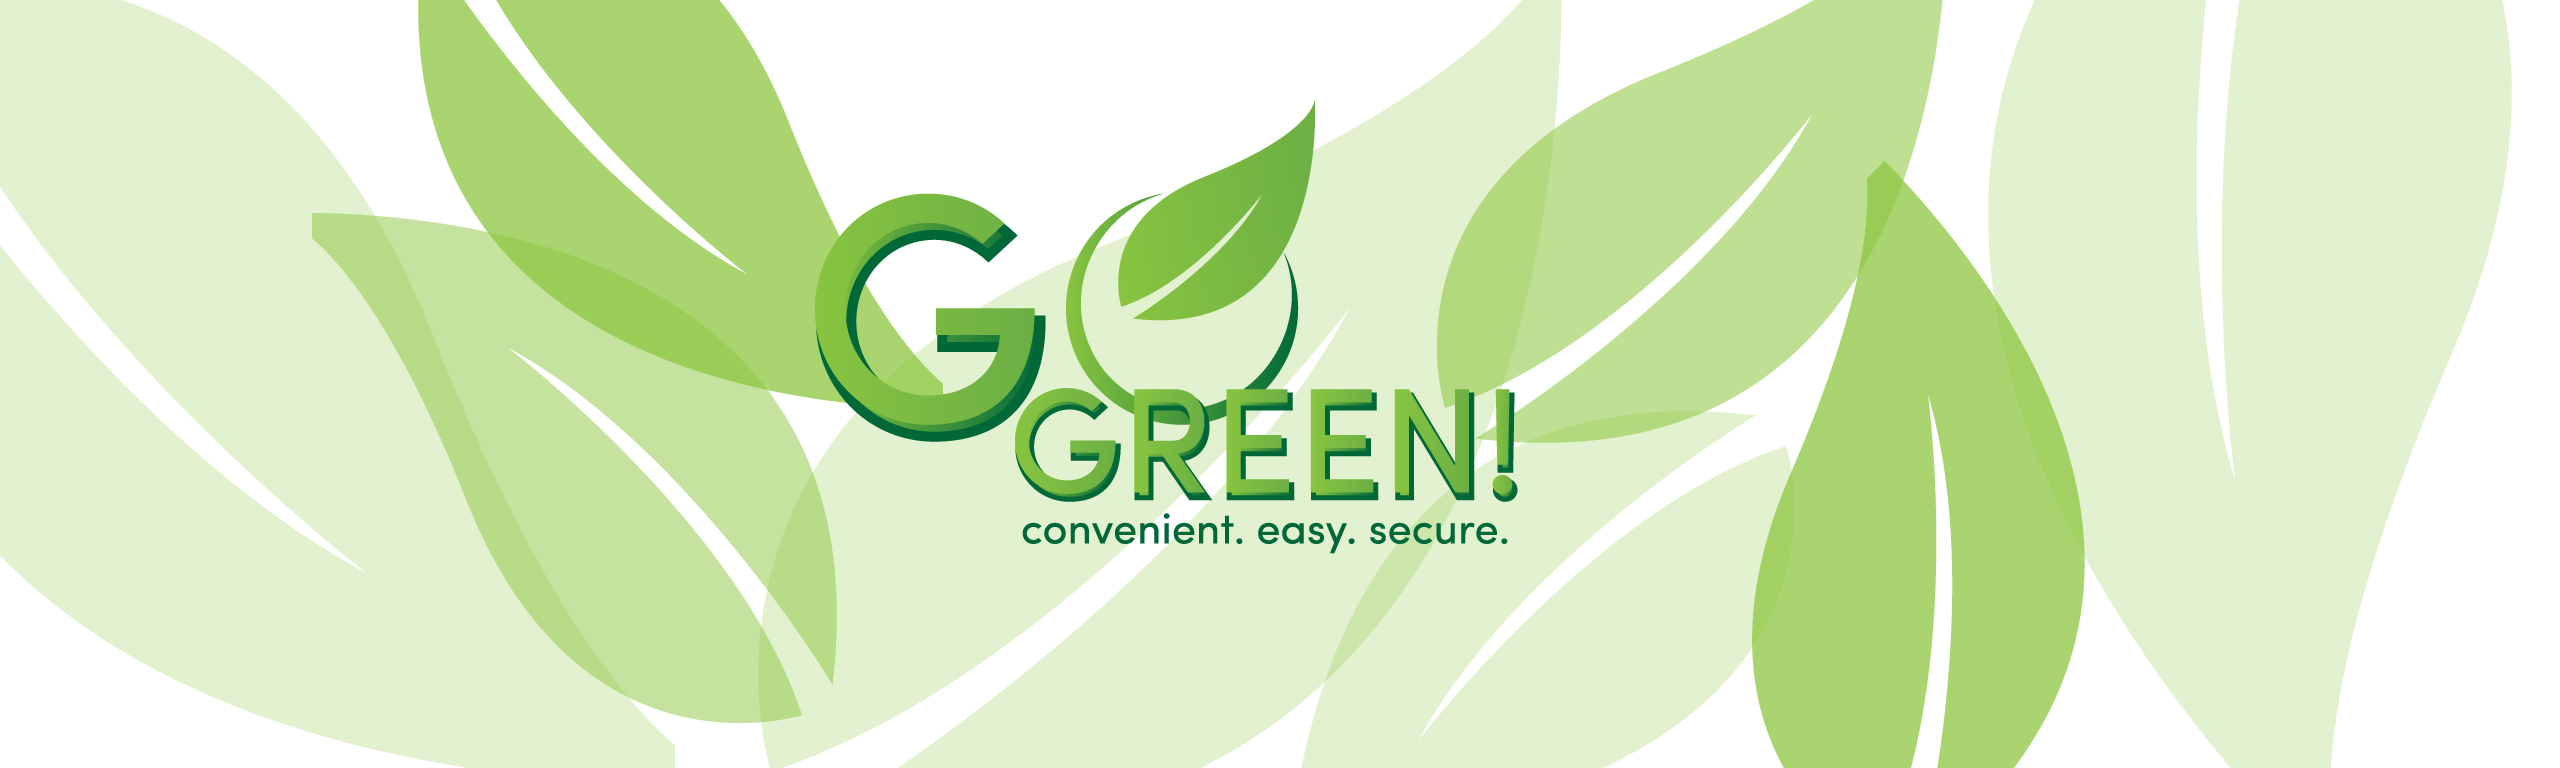 Go Green with eStatements!